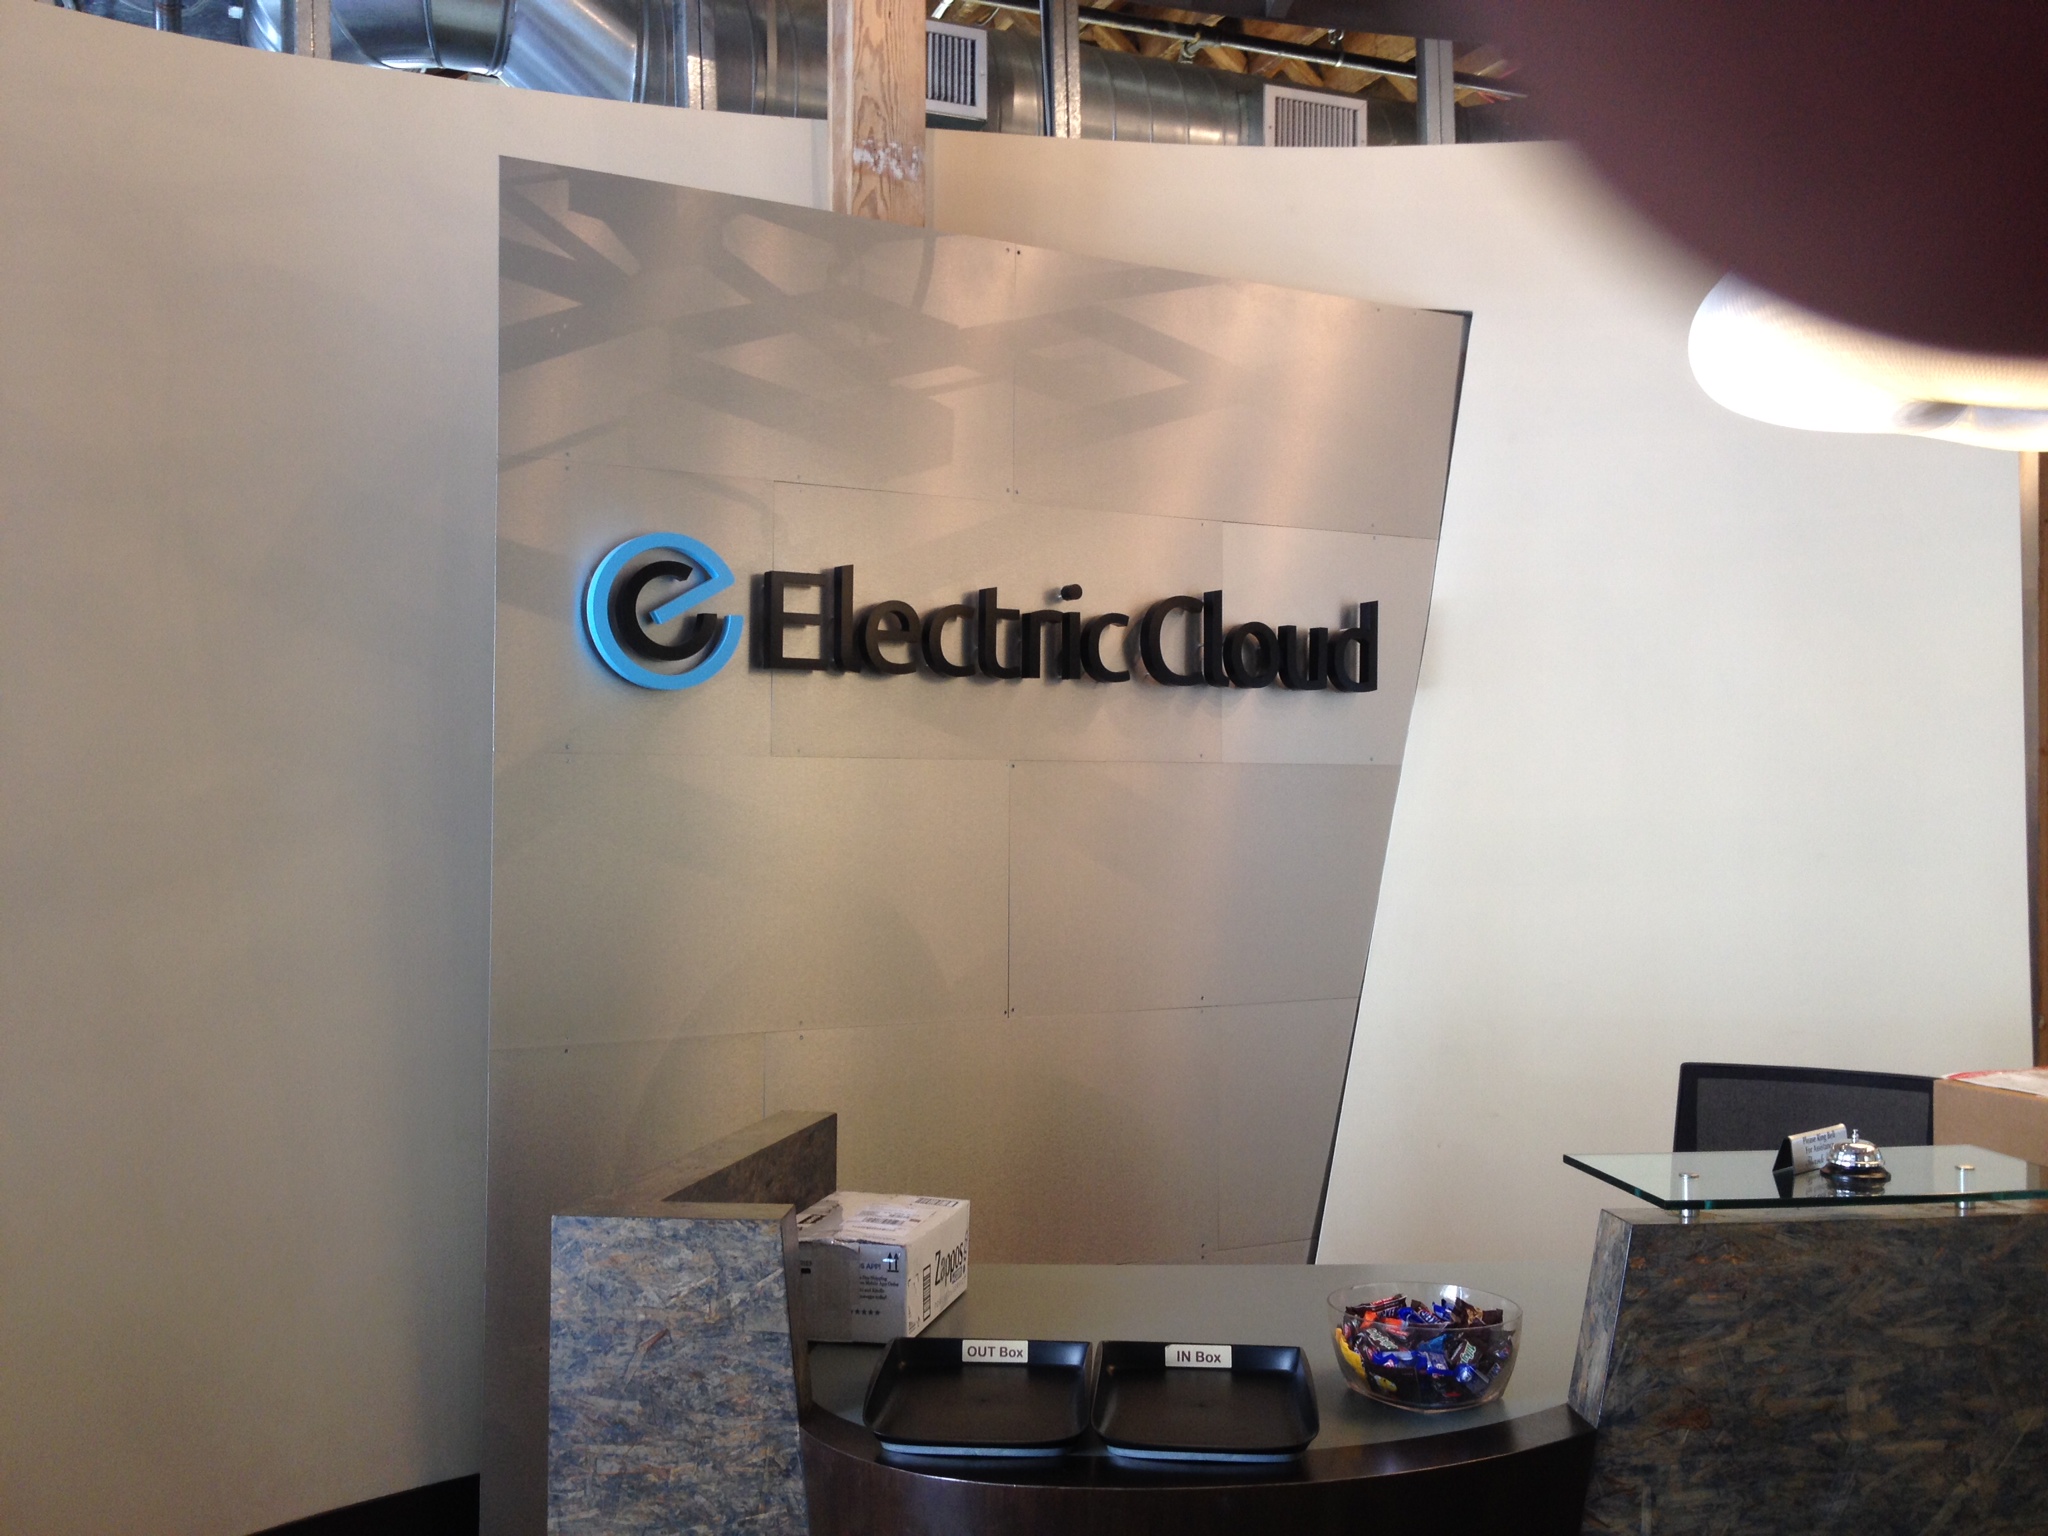 Electric Cloud – San Jose, CA